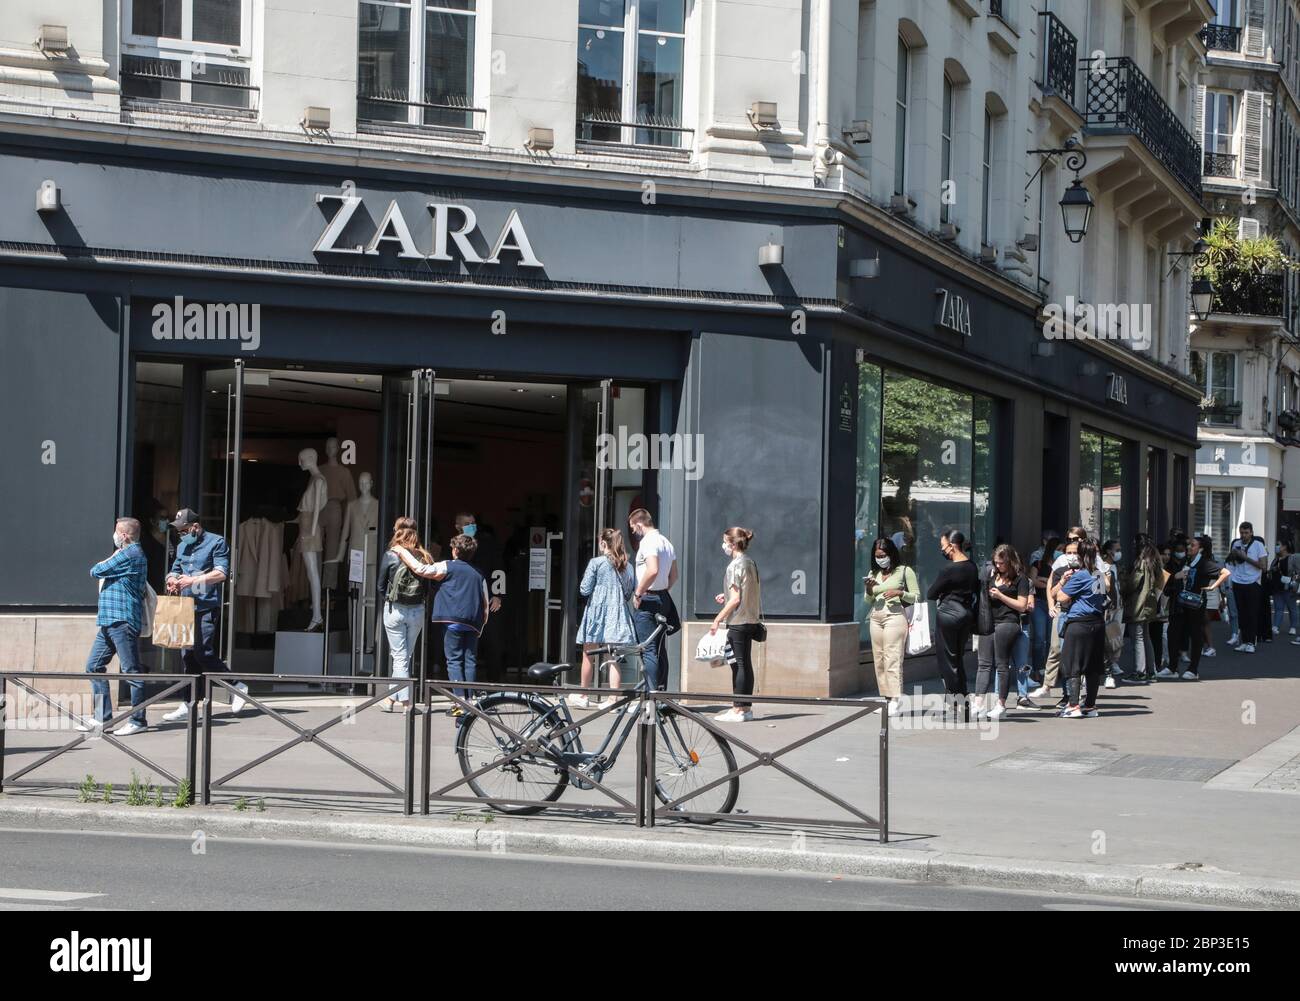 Paris france zara hi-res stock photography and images - Alamy